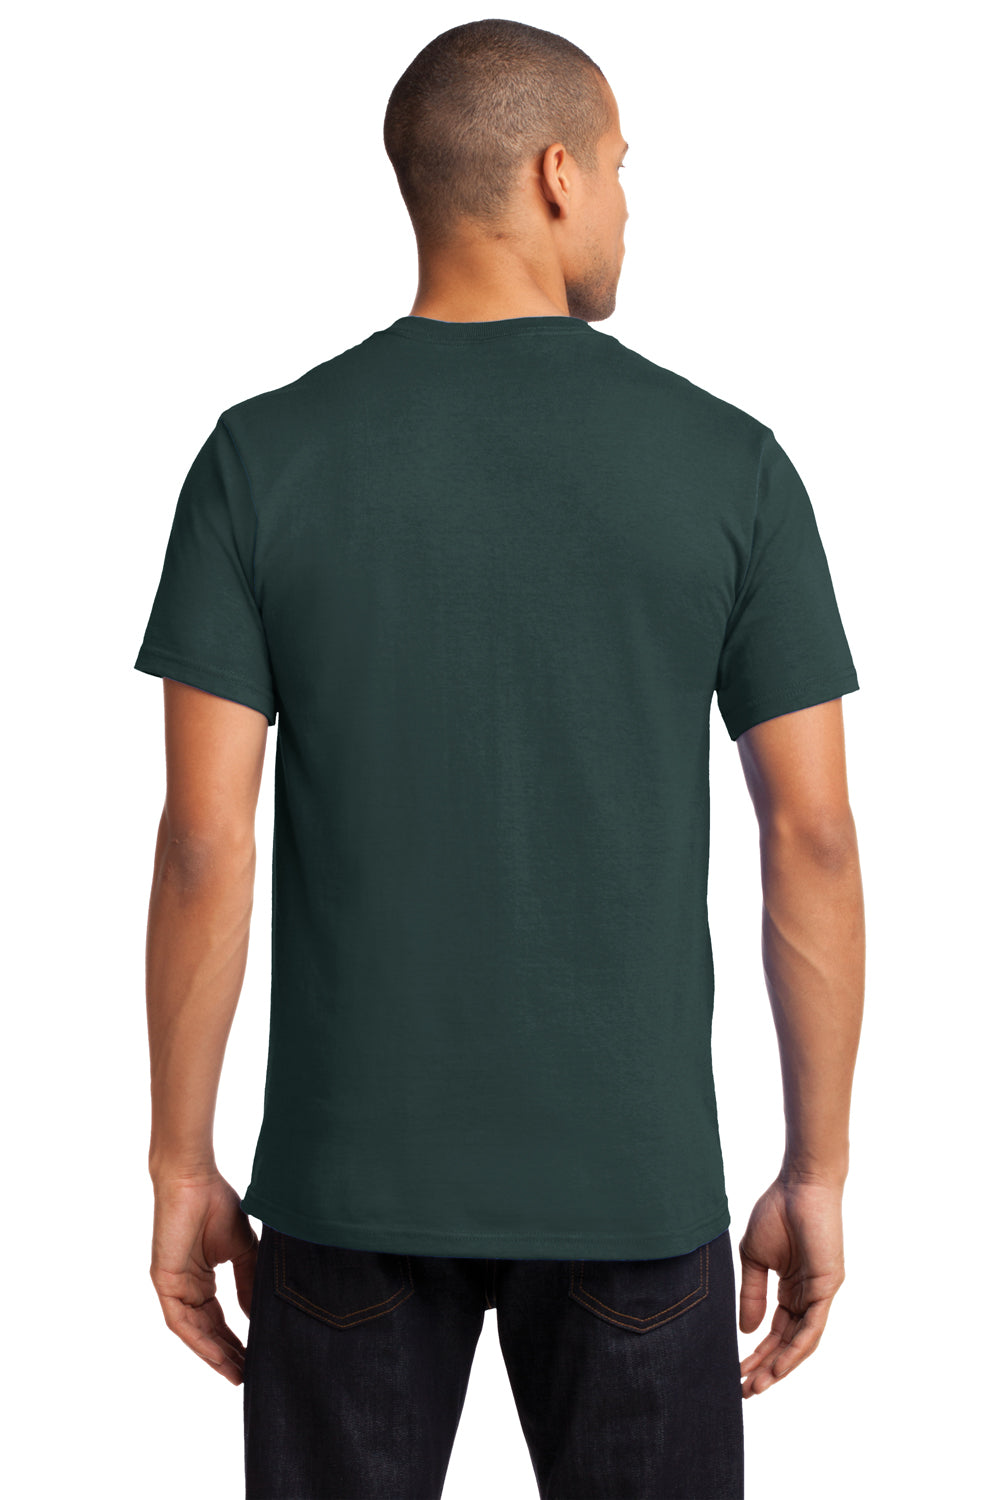 Port & Company PC61P Mens Essential Short Sleeve Crewneck T-Shirt w/ Pocket Dark Green Back